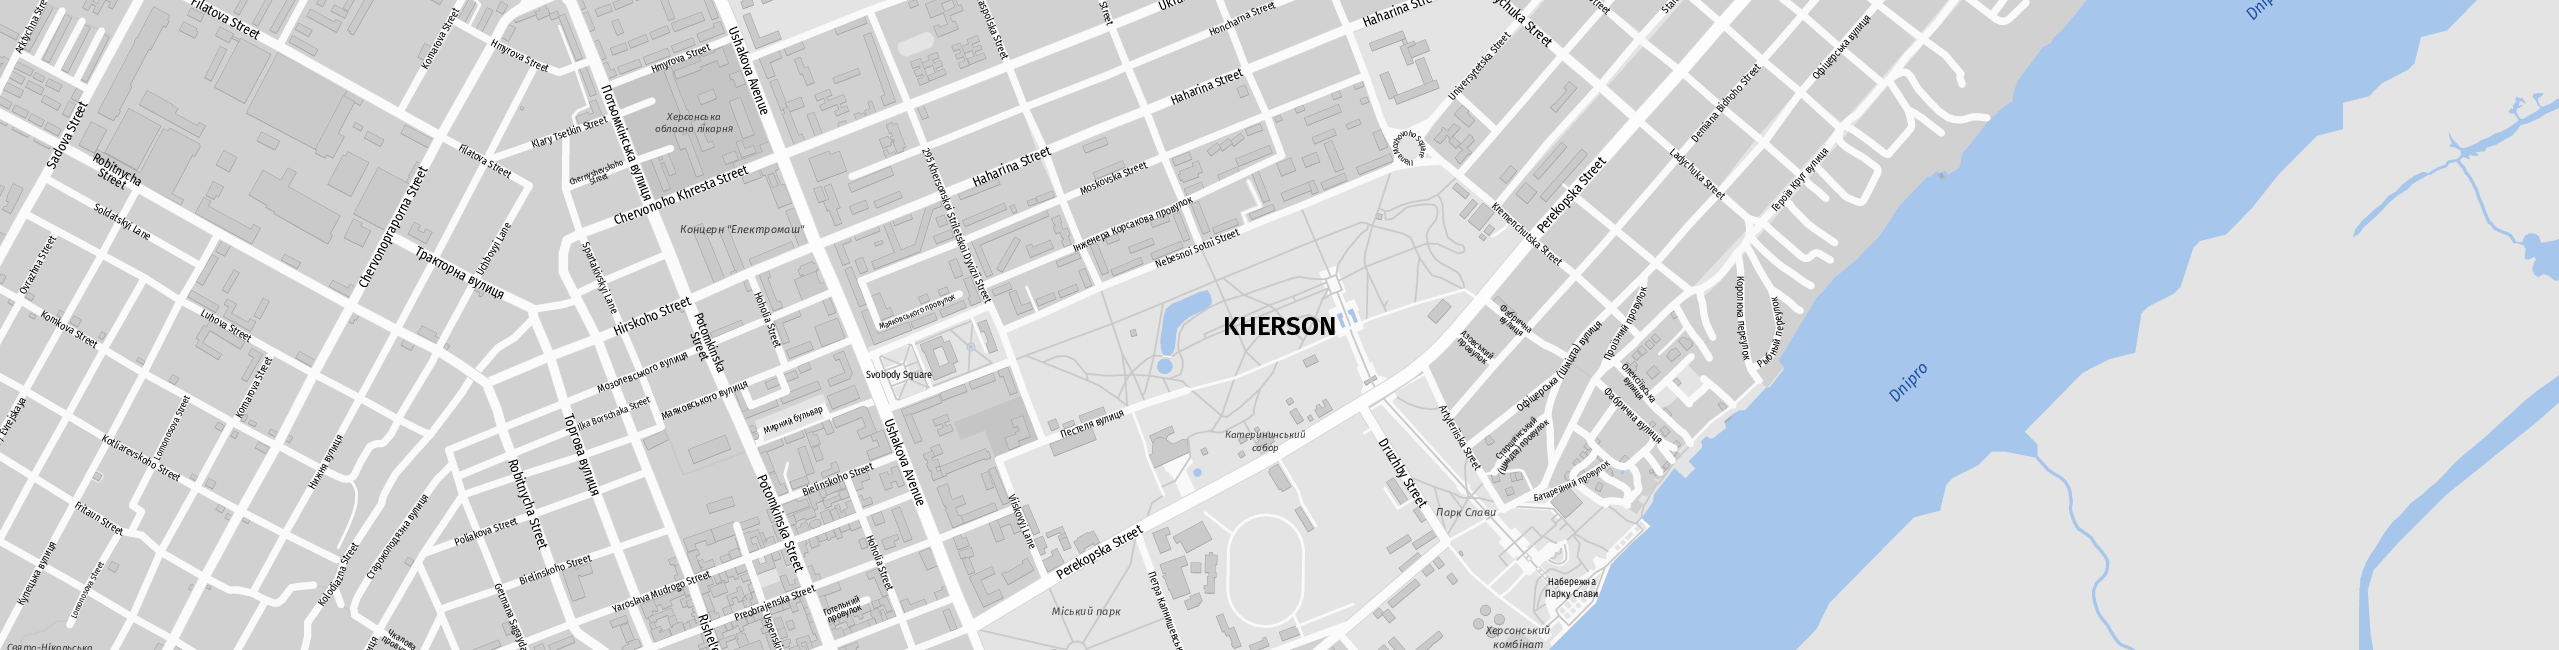 Stadtplan Kherson zum Downloaden.